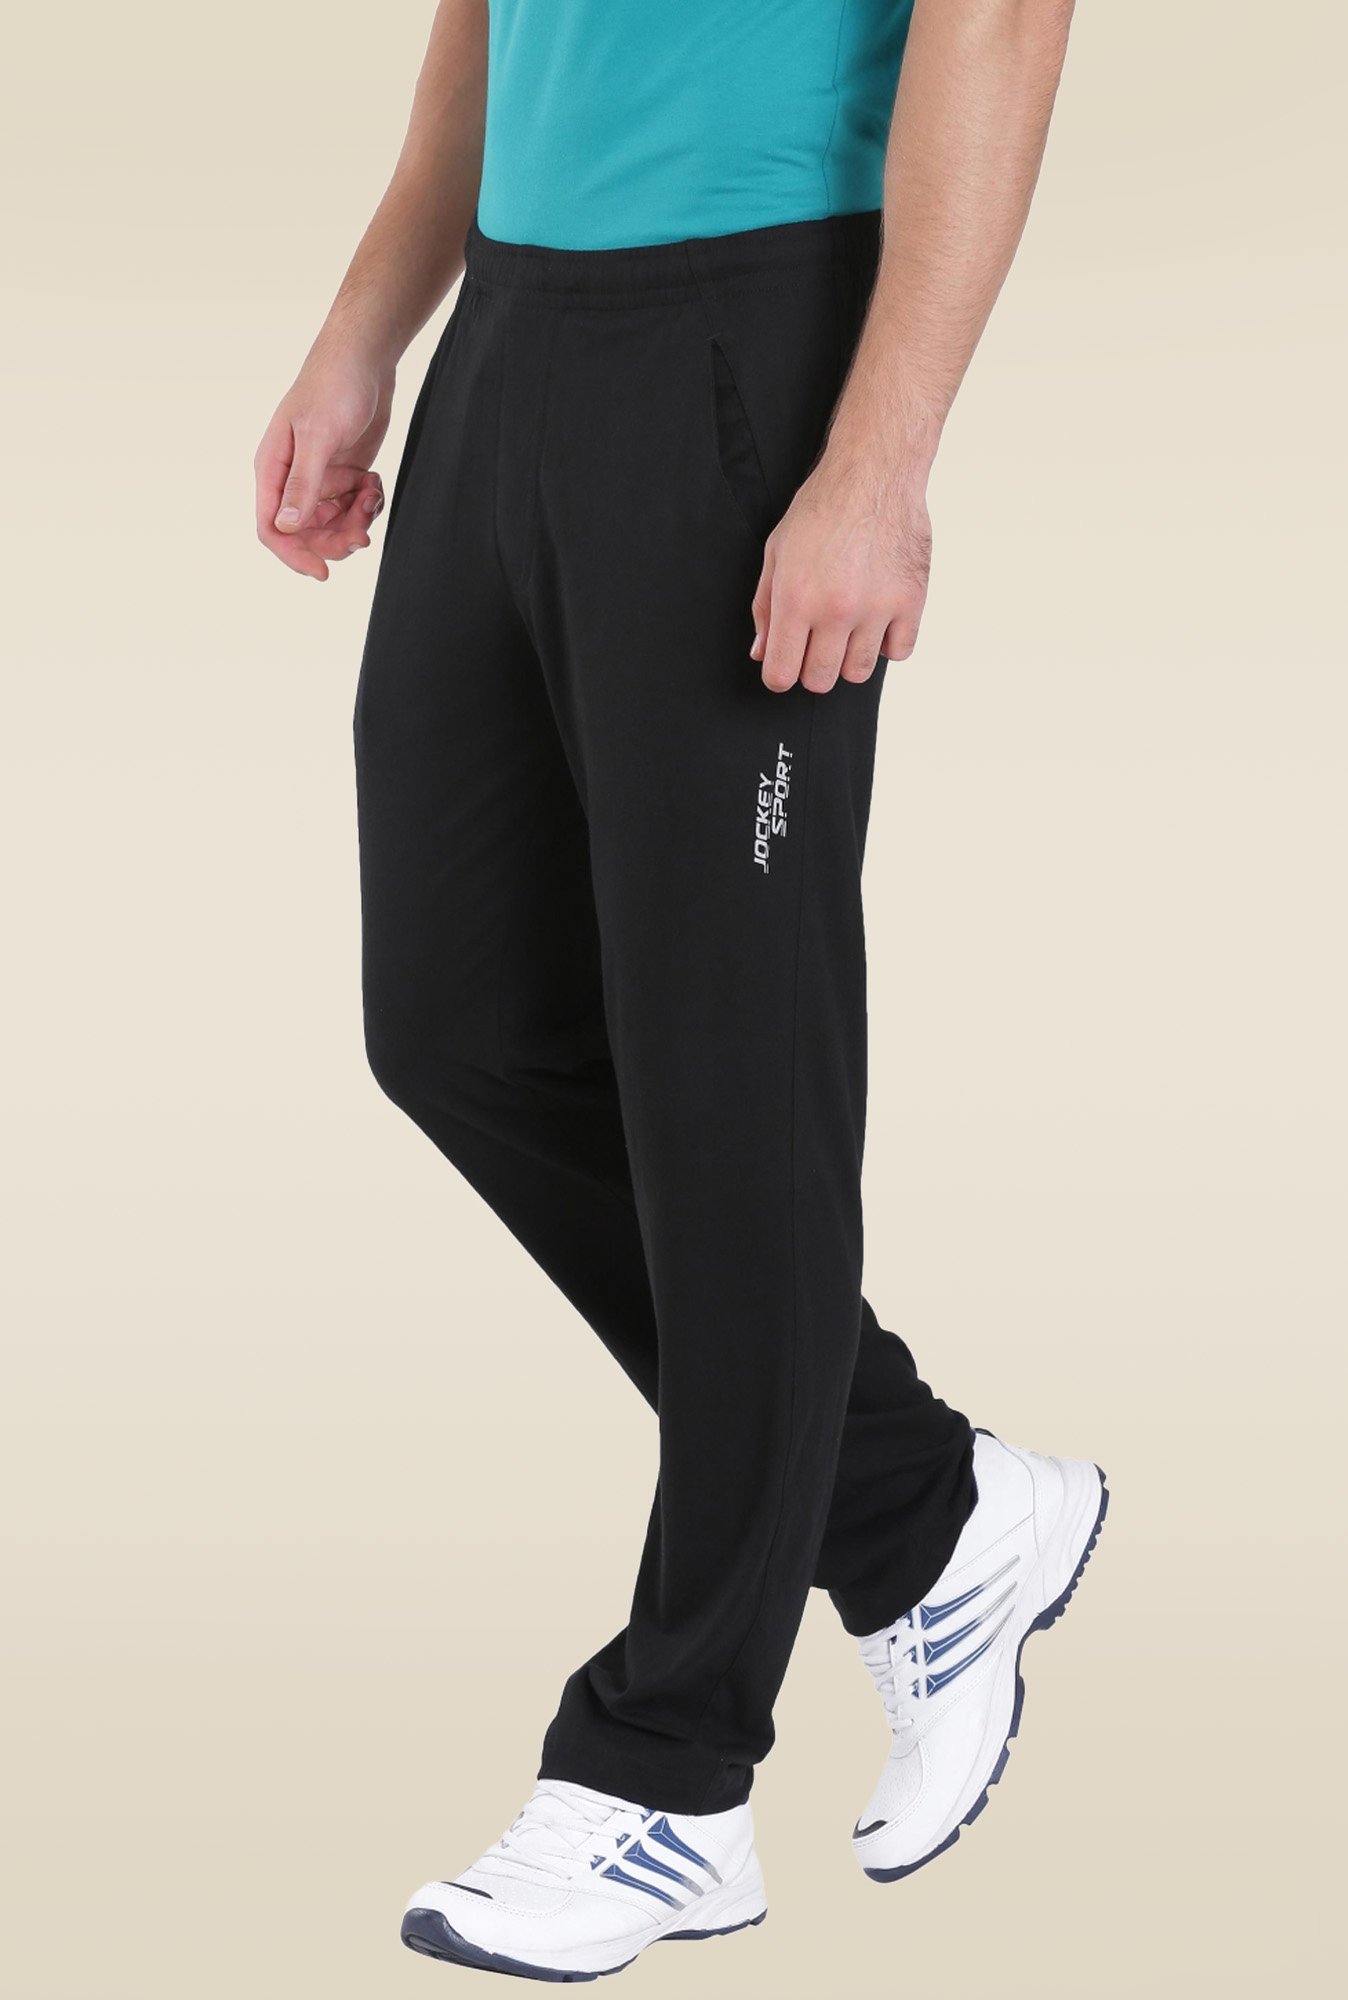 Jockey Activewear : Buy Jockey Charcoal Melange & Black Sports Track Pants  Online | Nykaa Fashion.